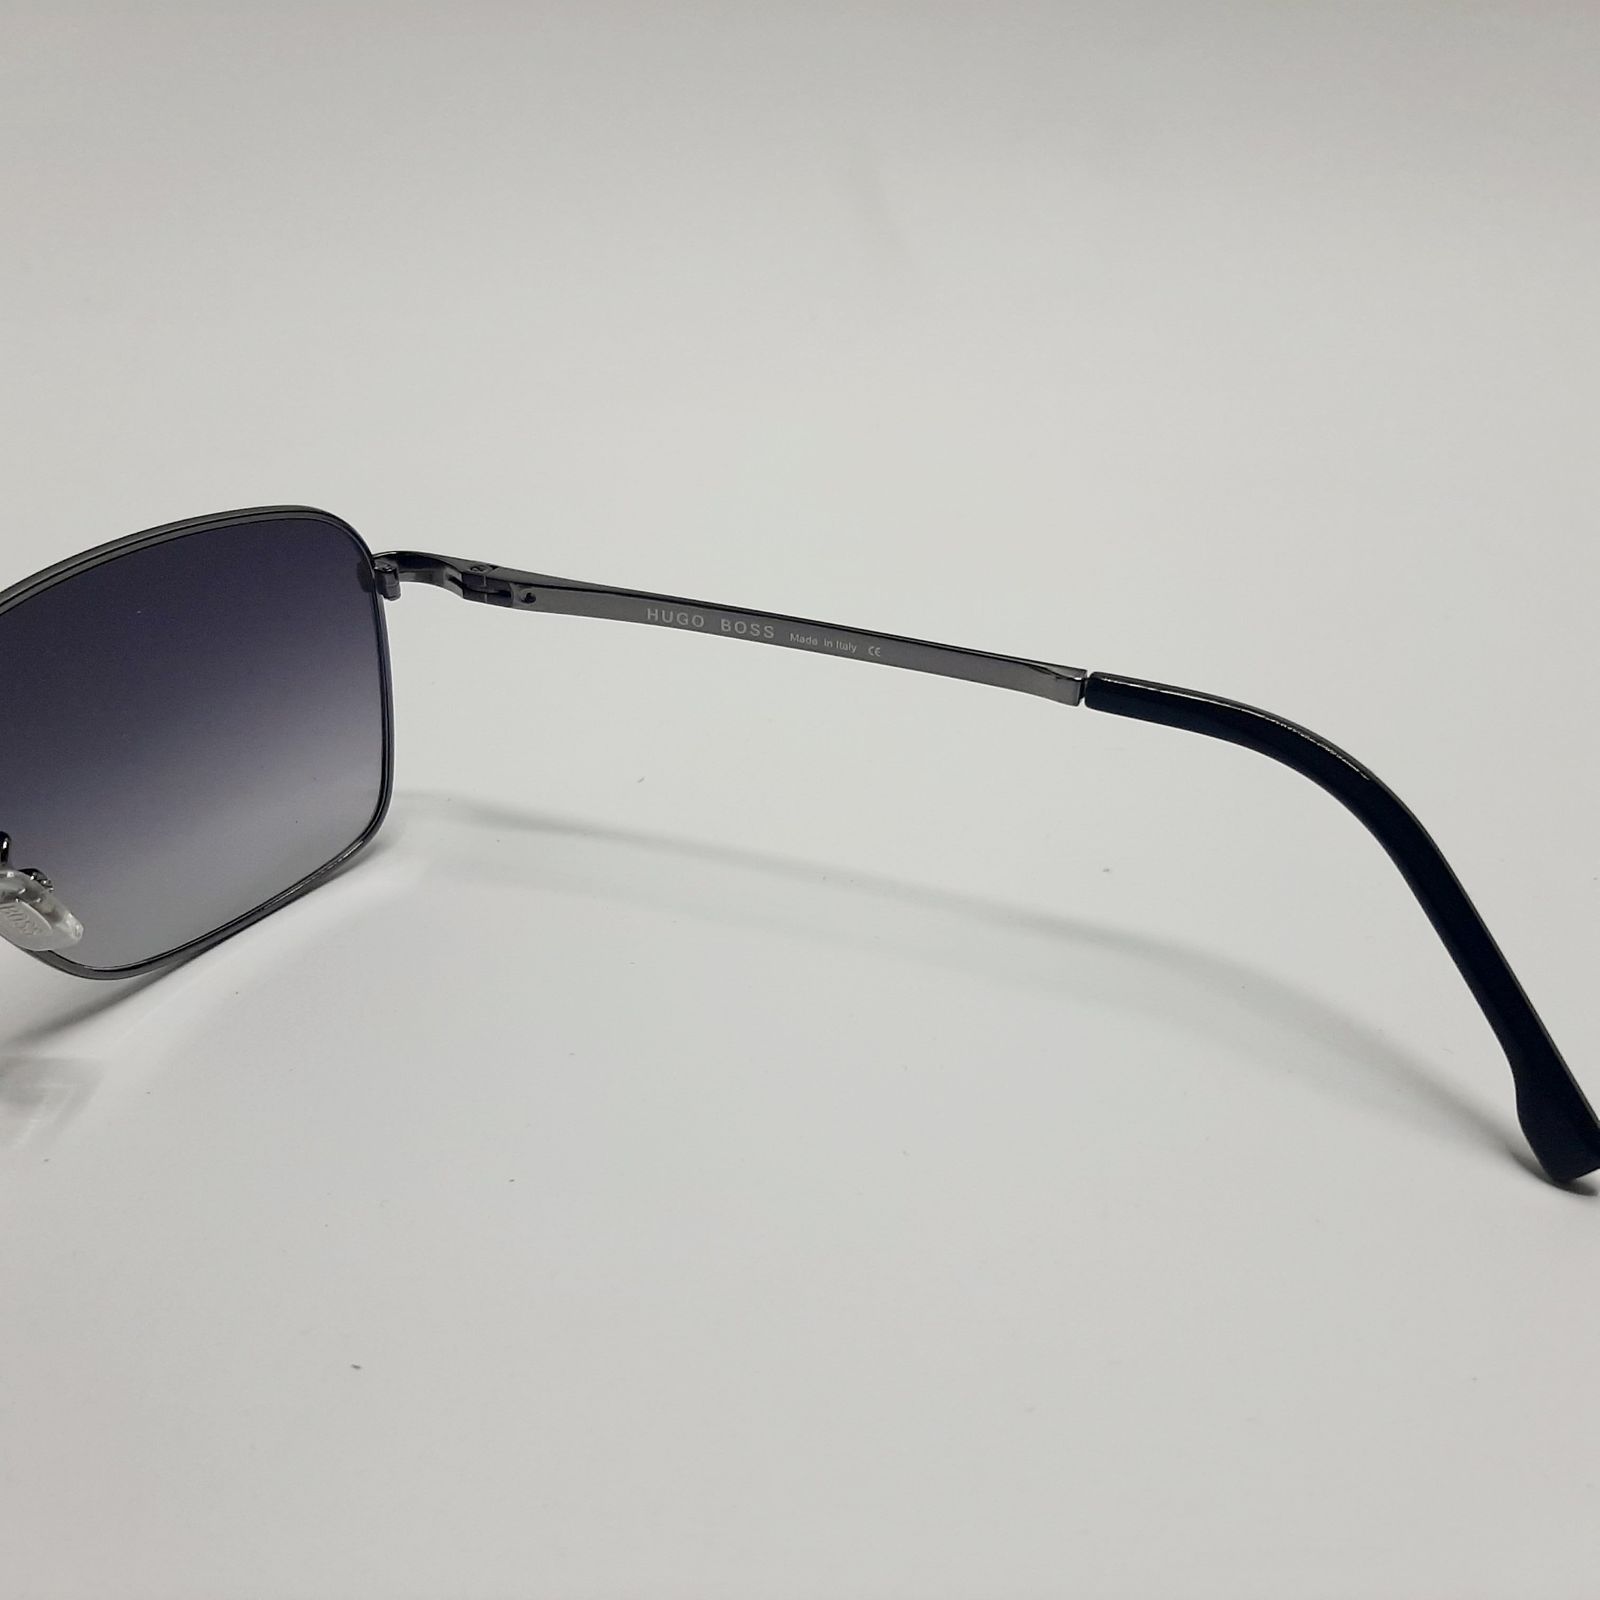 عینک آفتابی هوگو باس مدل HB1068c3 -  - 6